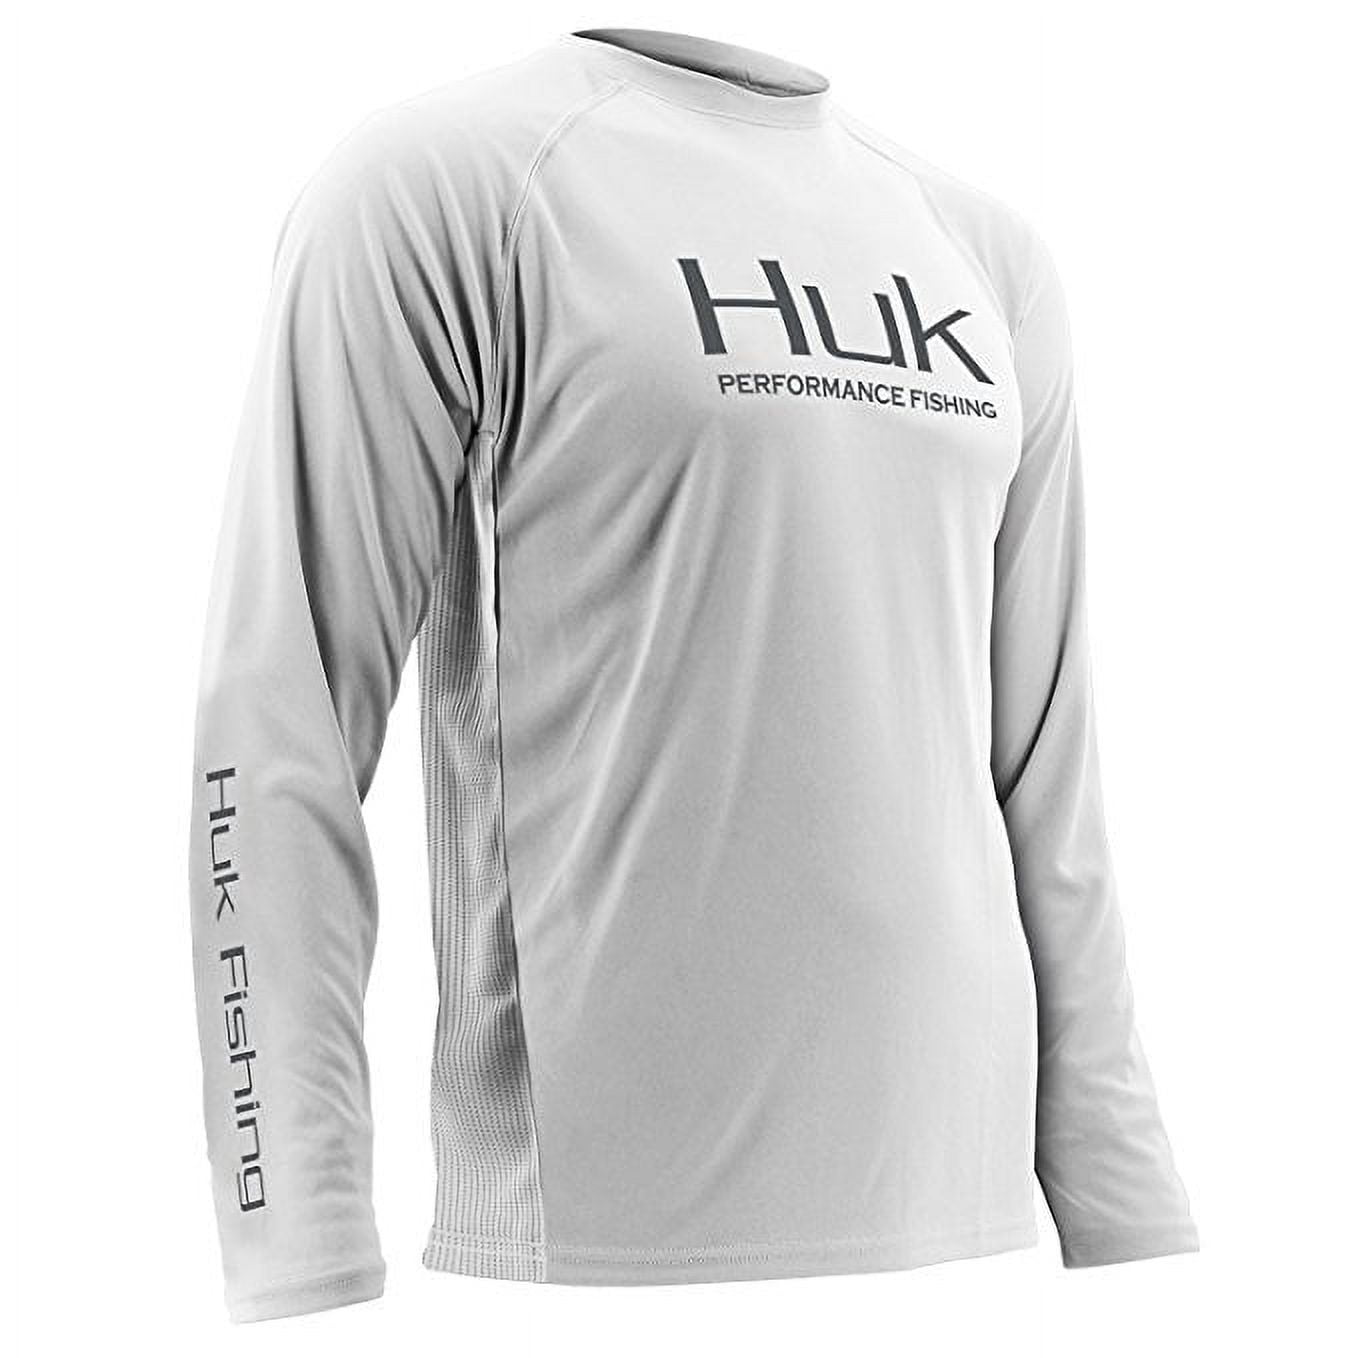 Huk Performance Kryptek Vented LS Shirt, White, 3XL - H1200118-100-3X 